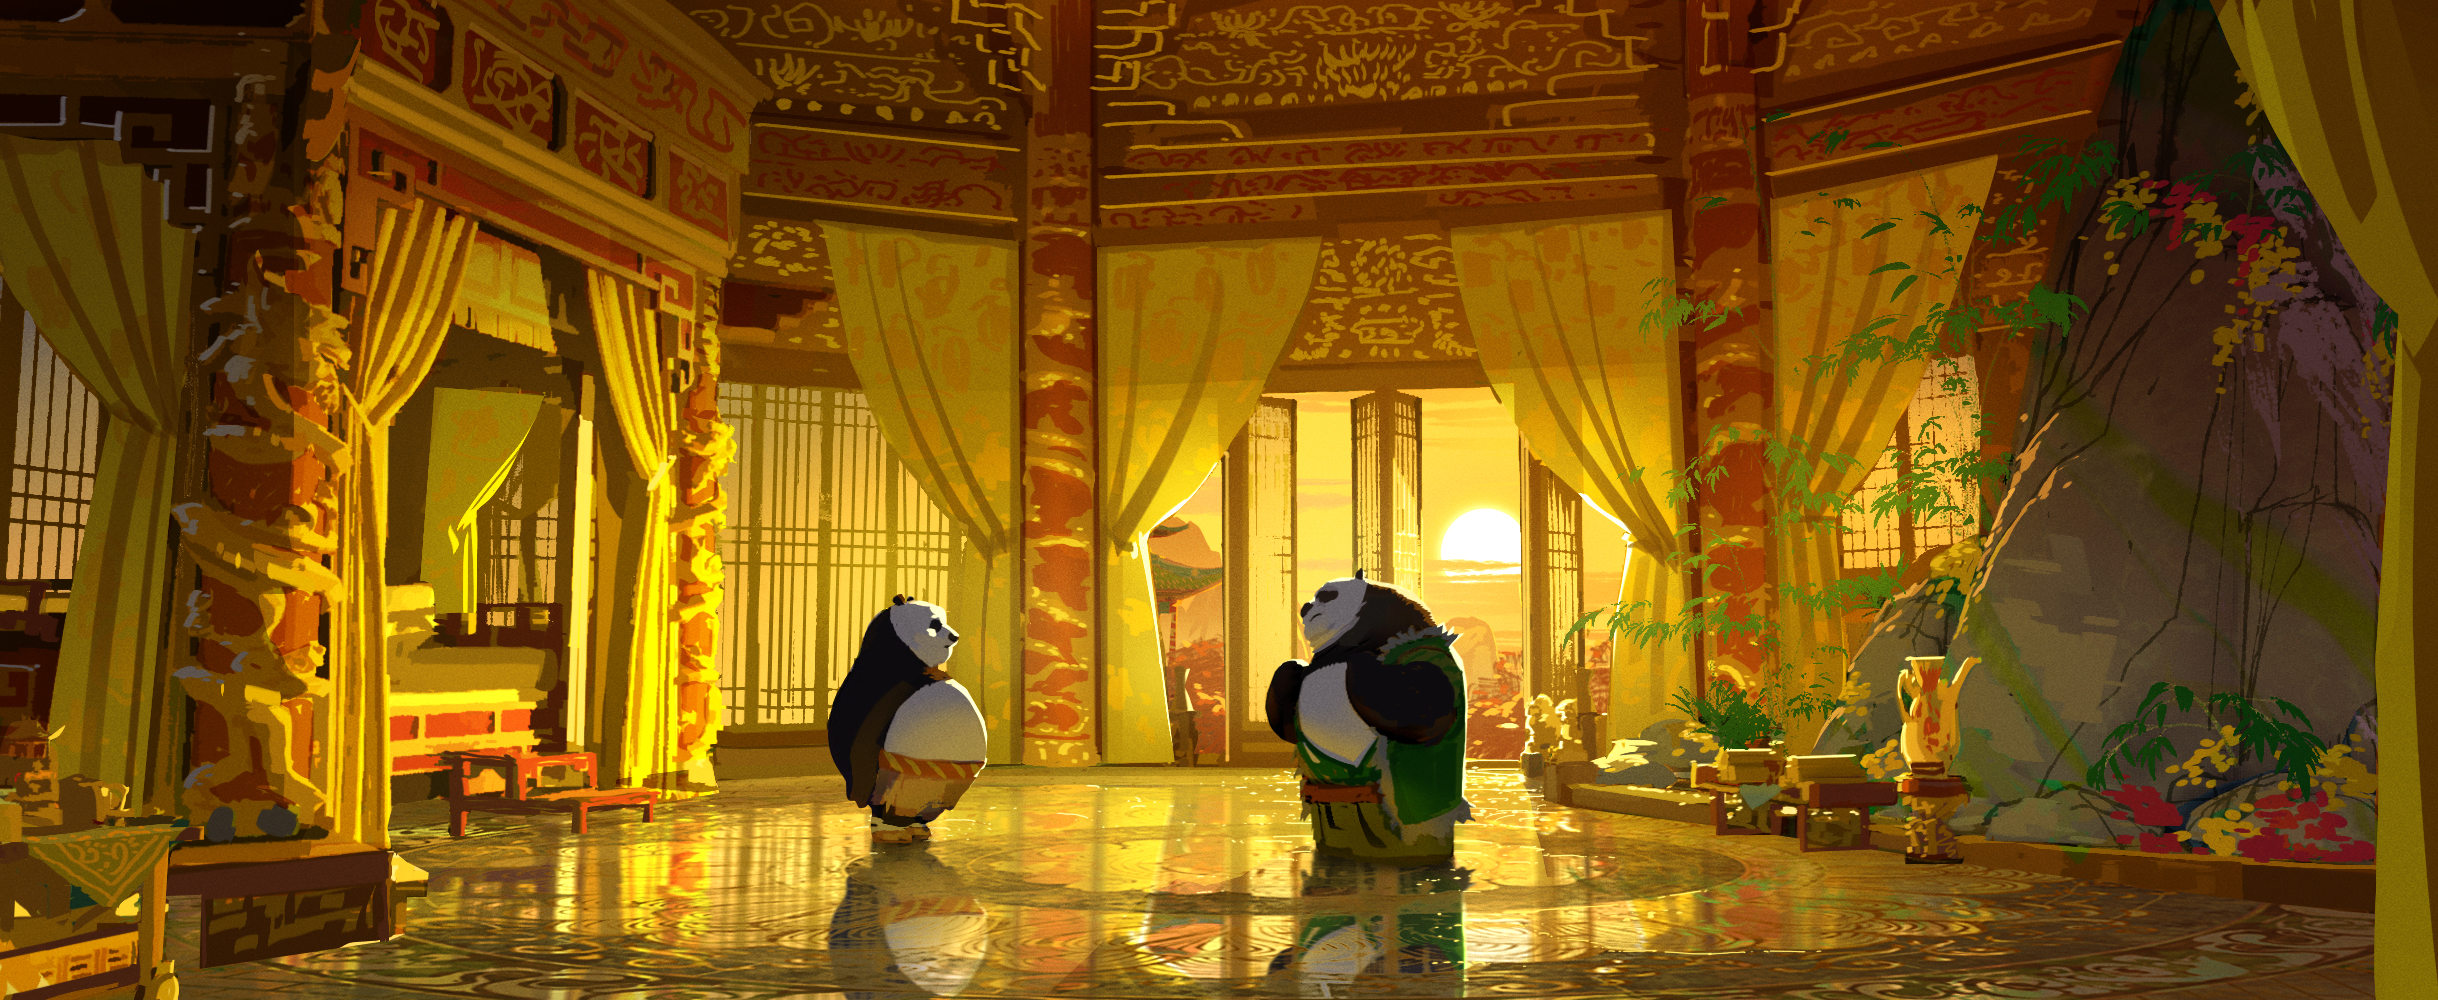  Kung Fu Panda 3, DWA Color key - Chrysanthemum suite 